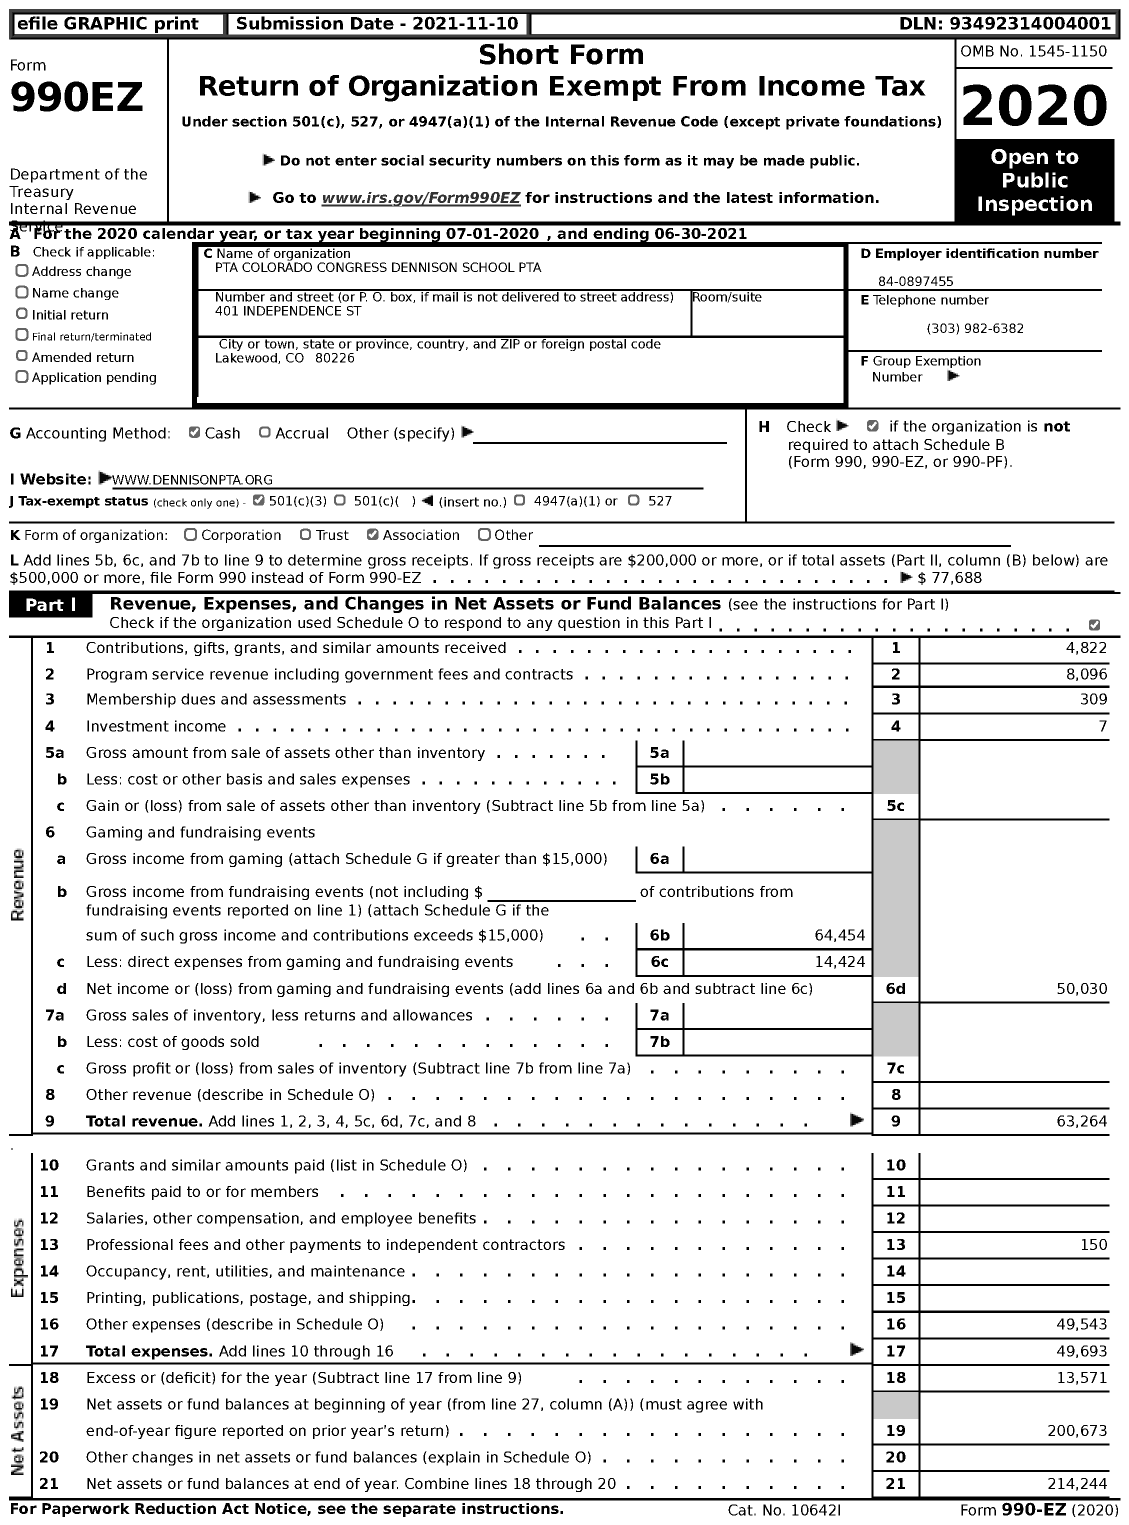 Image of first page of 2020 Form 990EZ for PTA Colorado Congress Dennison School PTA